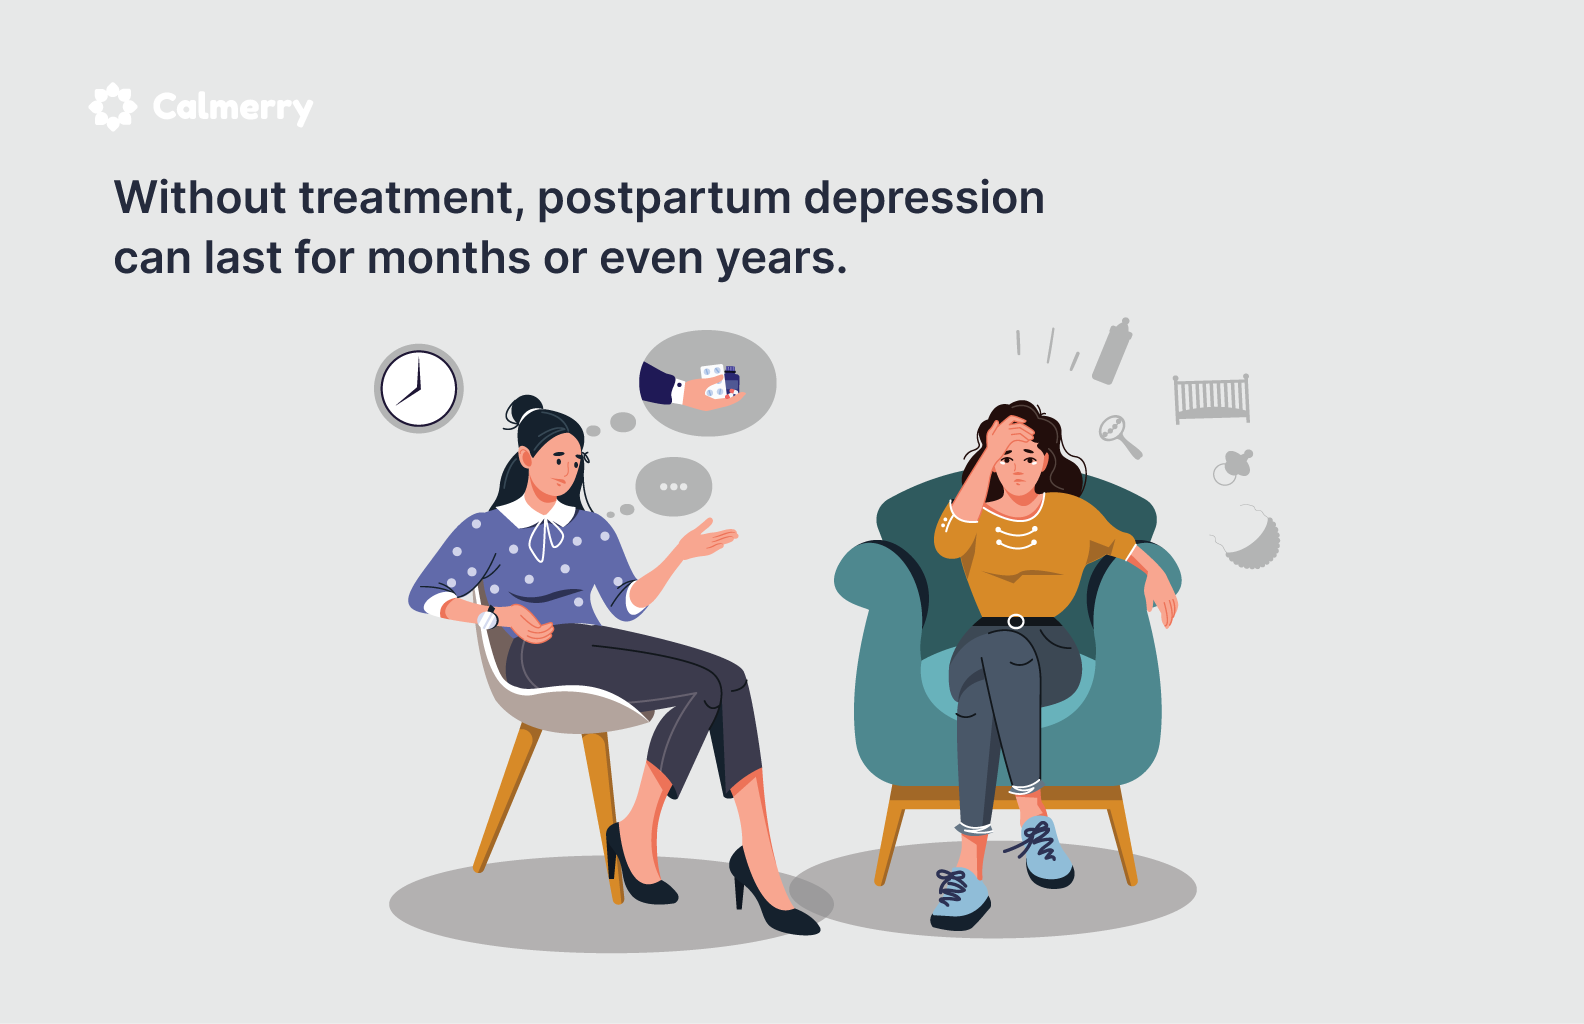 How long does postpartum depression last?